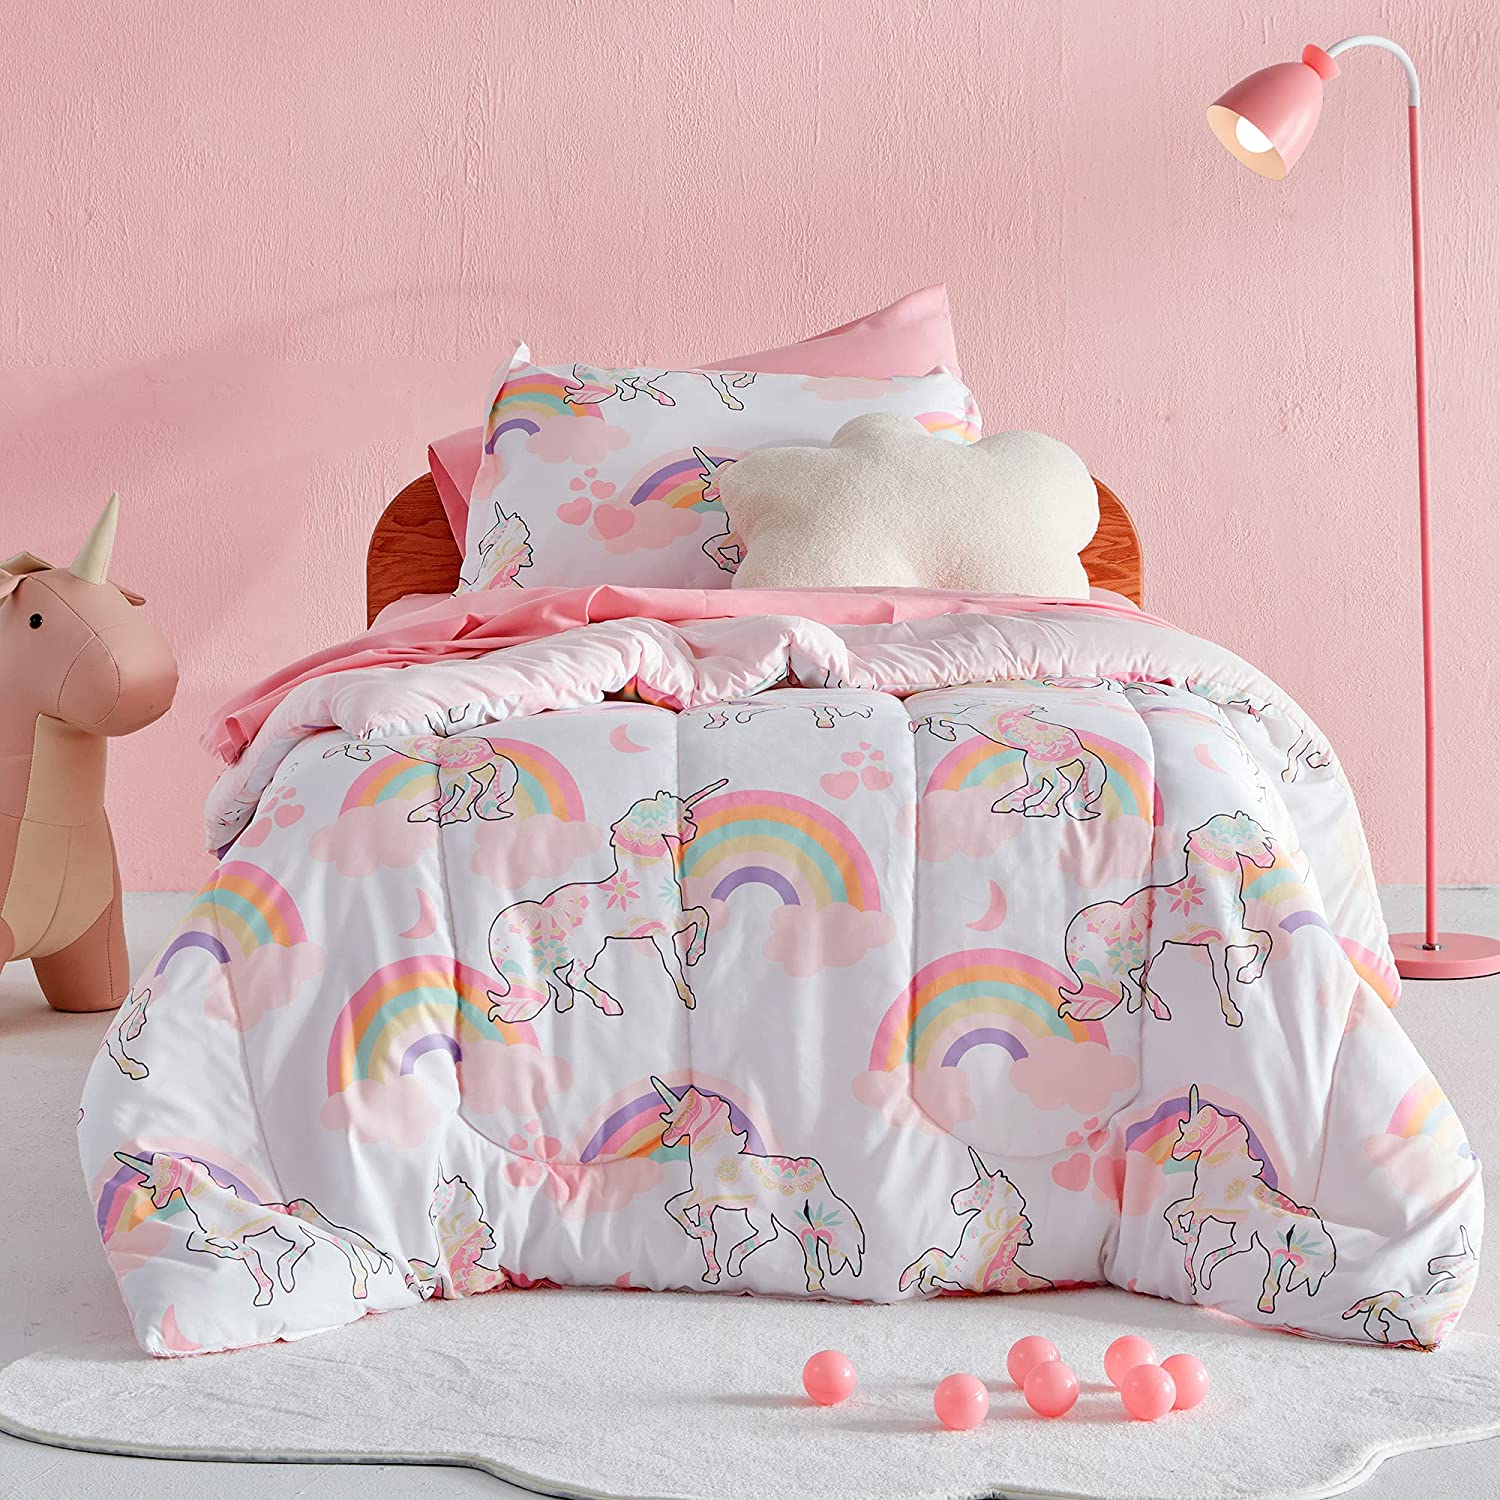 SLEEP ZONE Kids Bedding Twin Comforter Set - Cute Printed for Boys